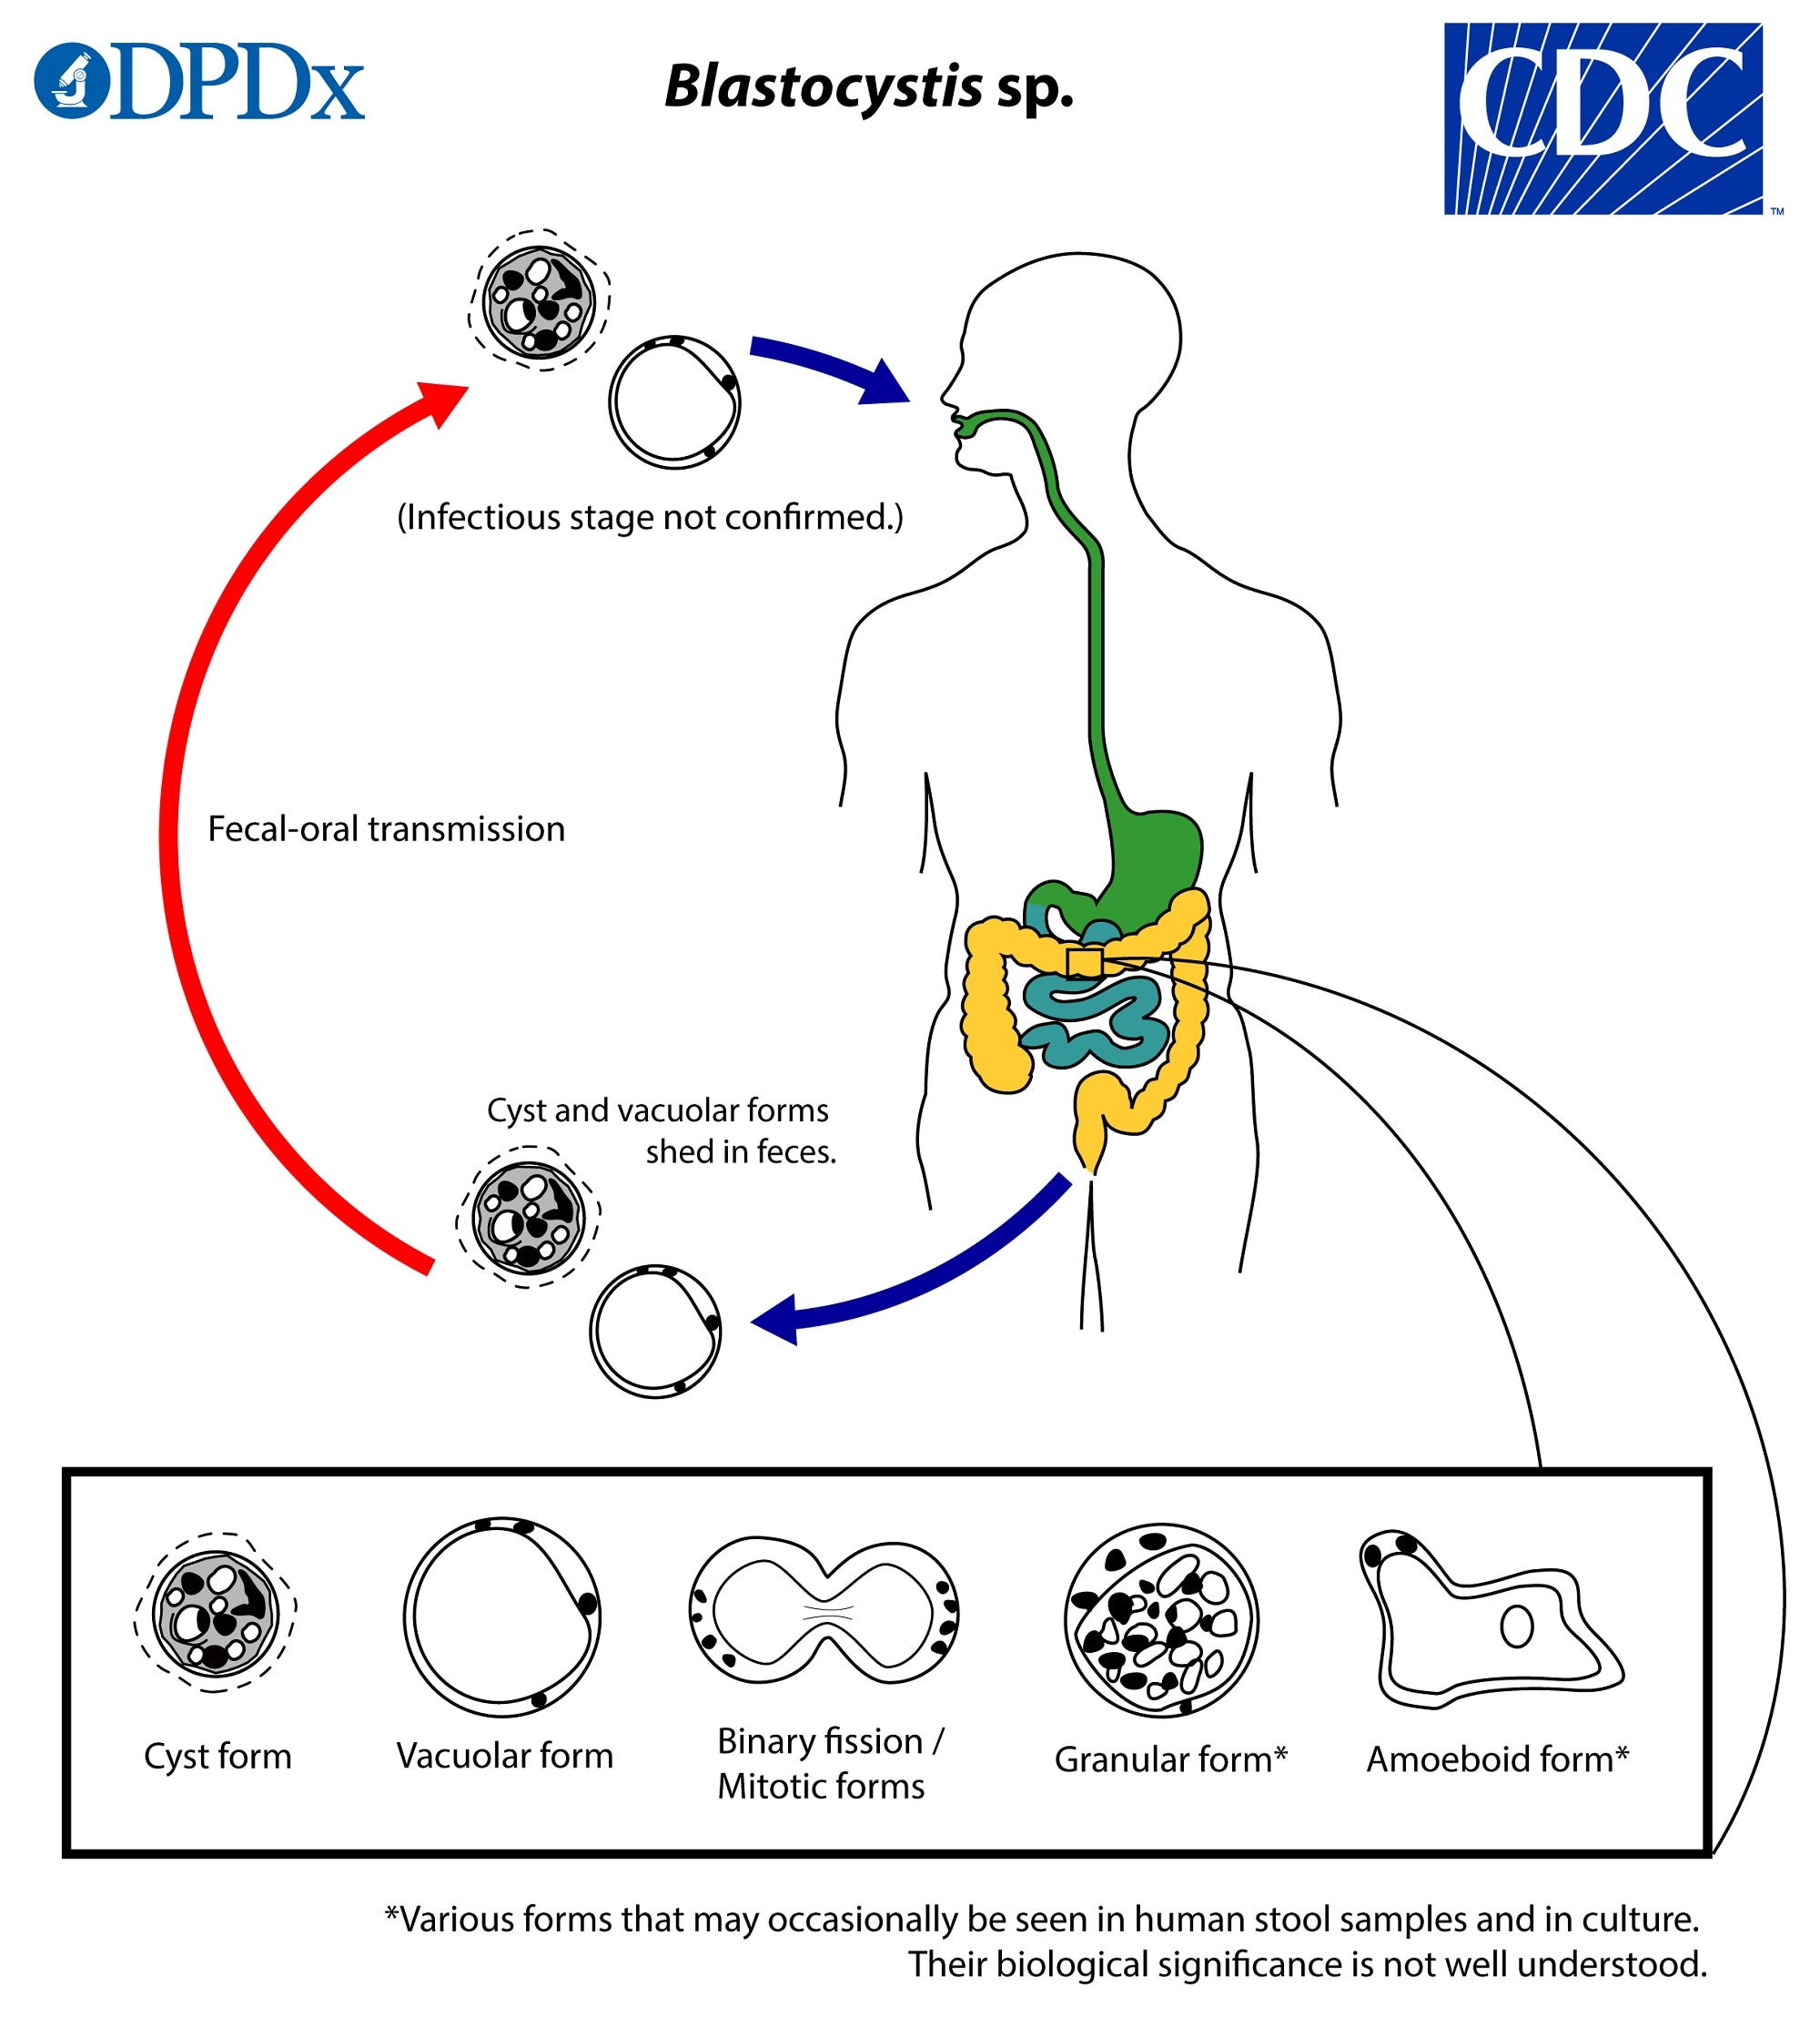 CDC - DPDx - Blastocystis hominis